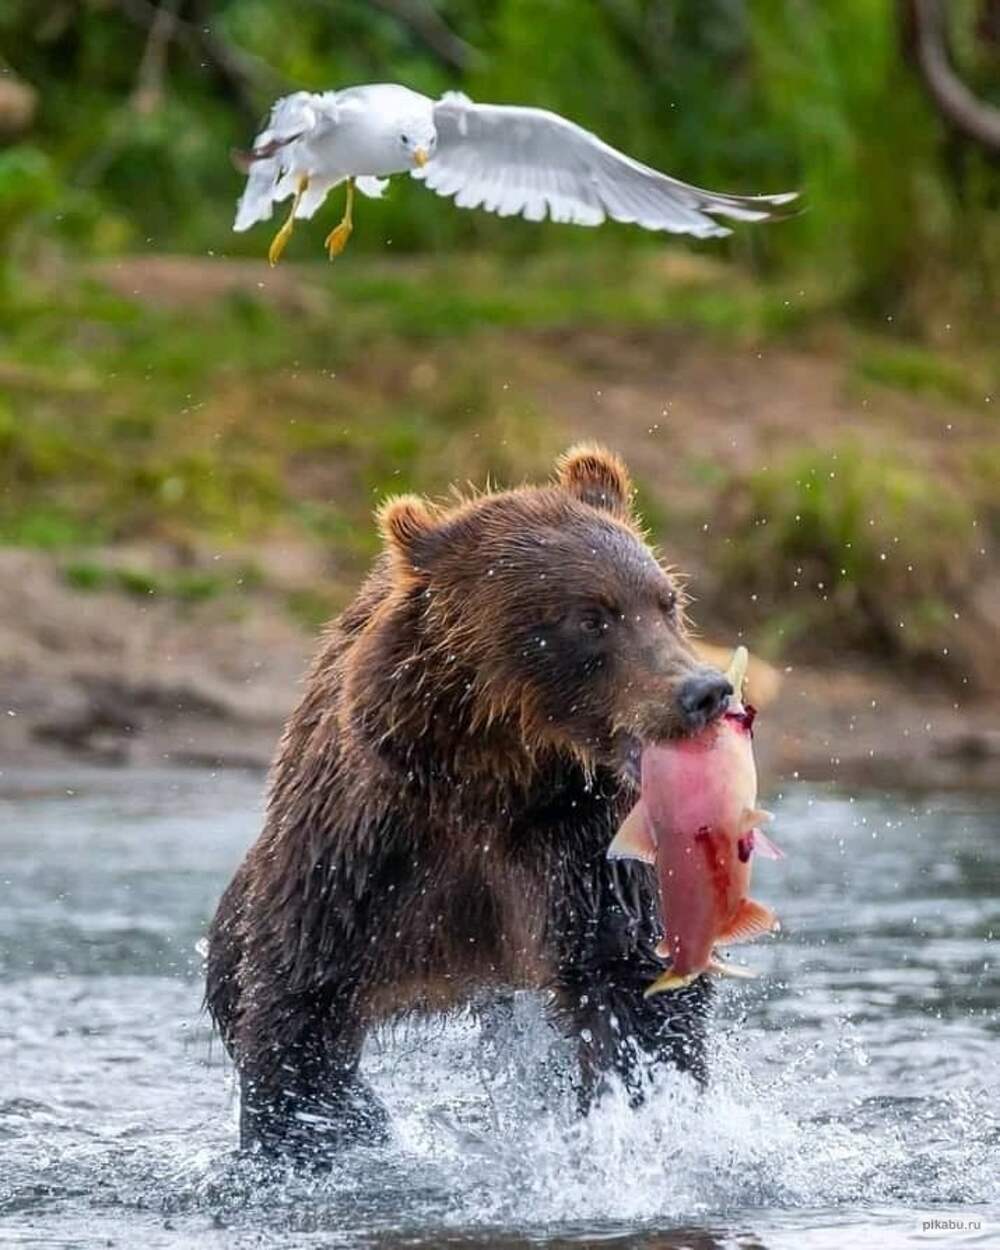 Какие медведи хищники. Медведь-Рыбак. Медведь хищник. Медведь хищник или. Камчатка медведи экскурсия.